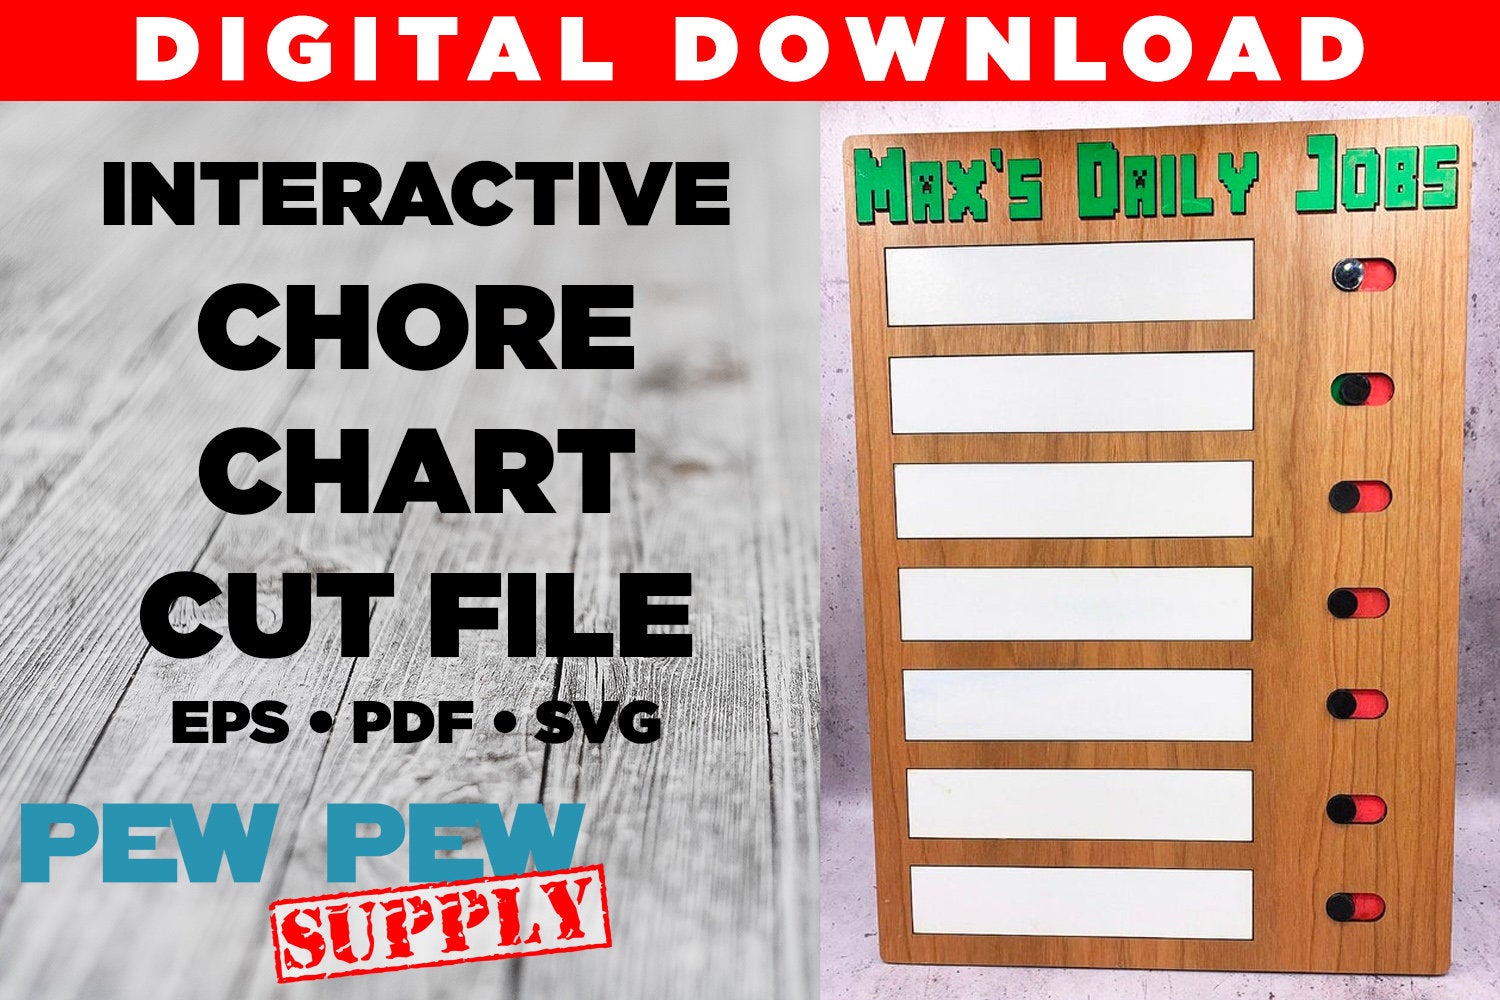 Customizable White Board Chore Chart, Laser Cutter File, Laser Cut Chore Chart, Chart Cut File, To Do List, Erasable Chore Chart